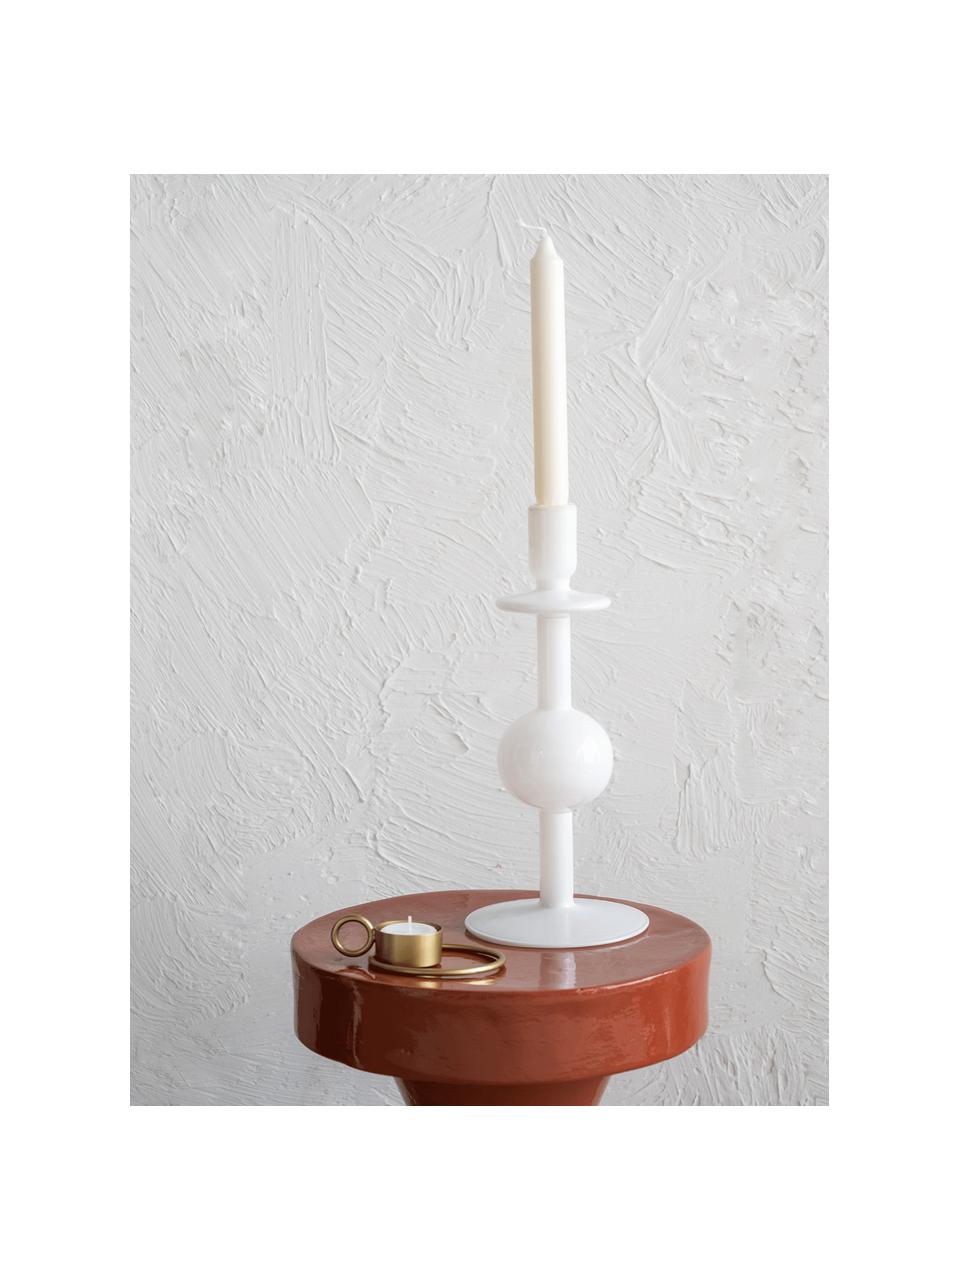 Kerzenhalter Bulb aus recyceltem Glas in Weiß, 2 Stück, Recyceltes Glas, Weiß, glänzend, Ø 13 x H 30 cm